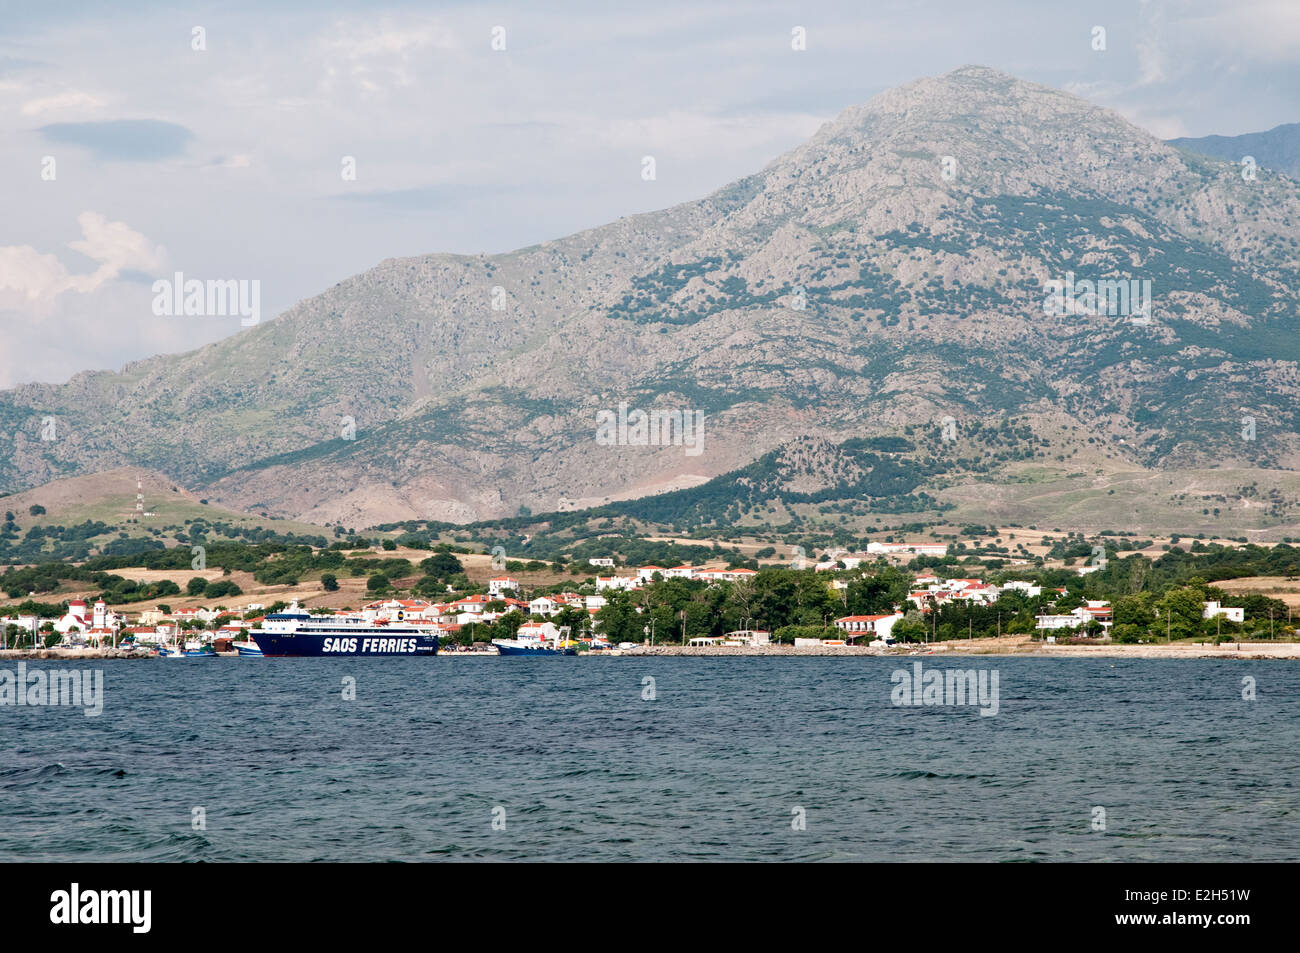 The port town of Kamariotissa on the Greek island of Samothraki, located in the Thracian Sea in the North Aegean, Thrace, Greece. Stock Photo